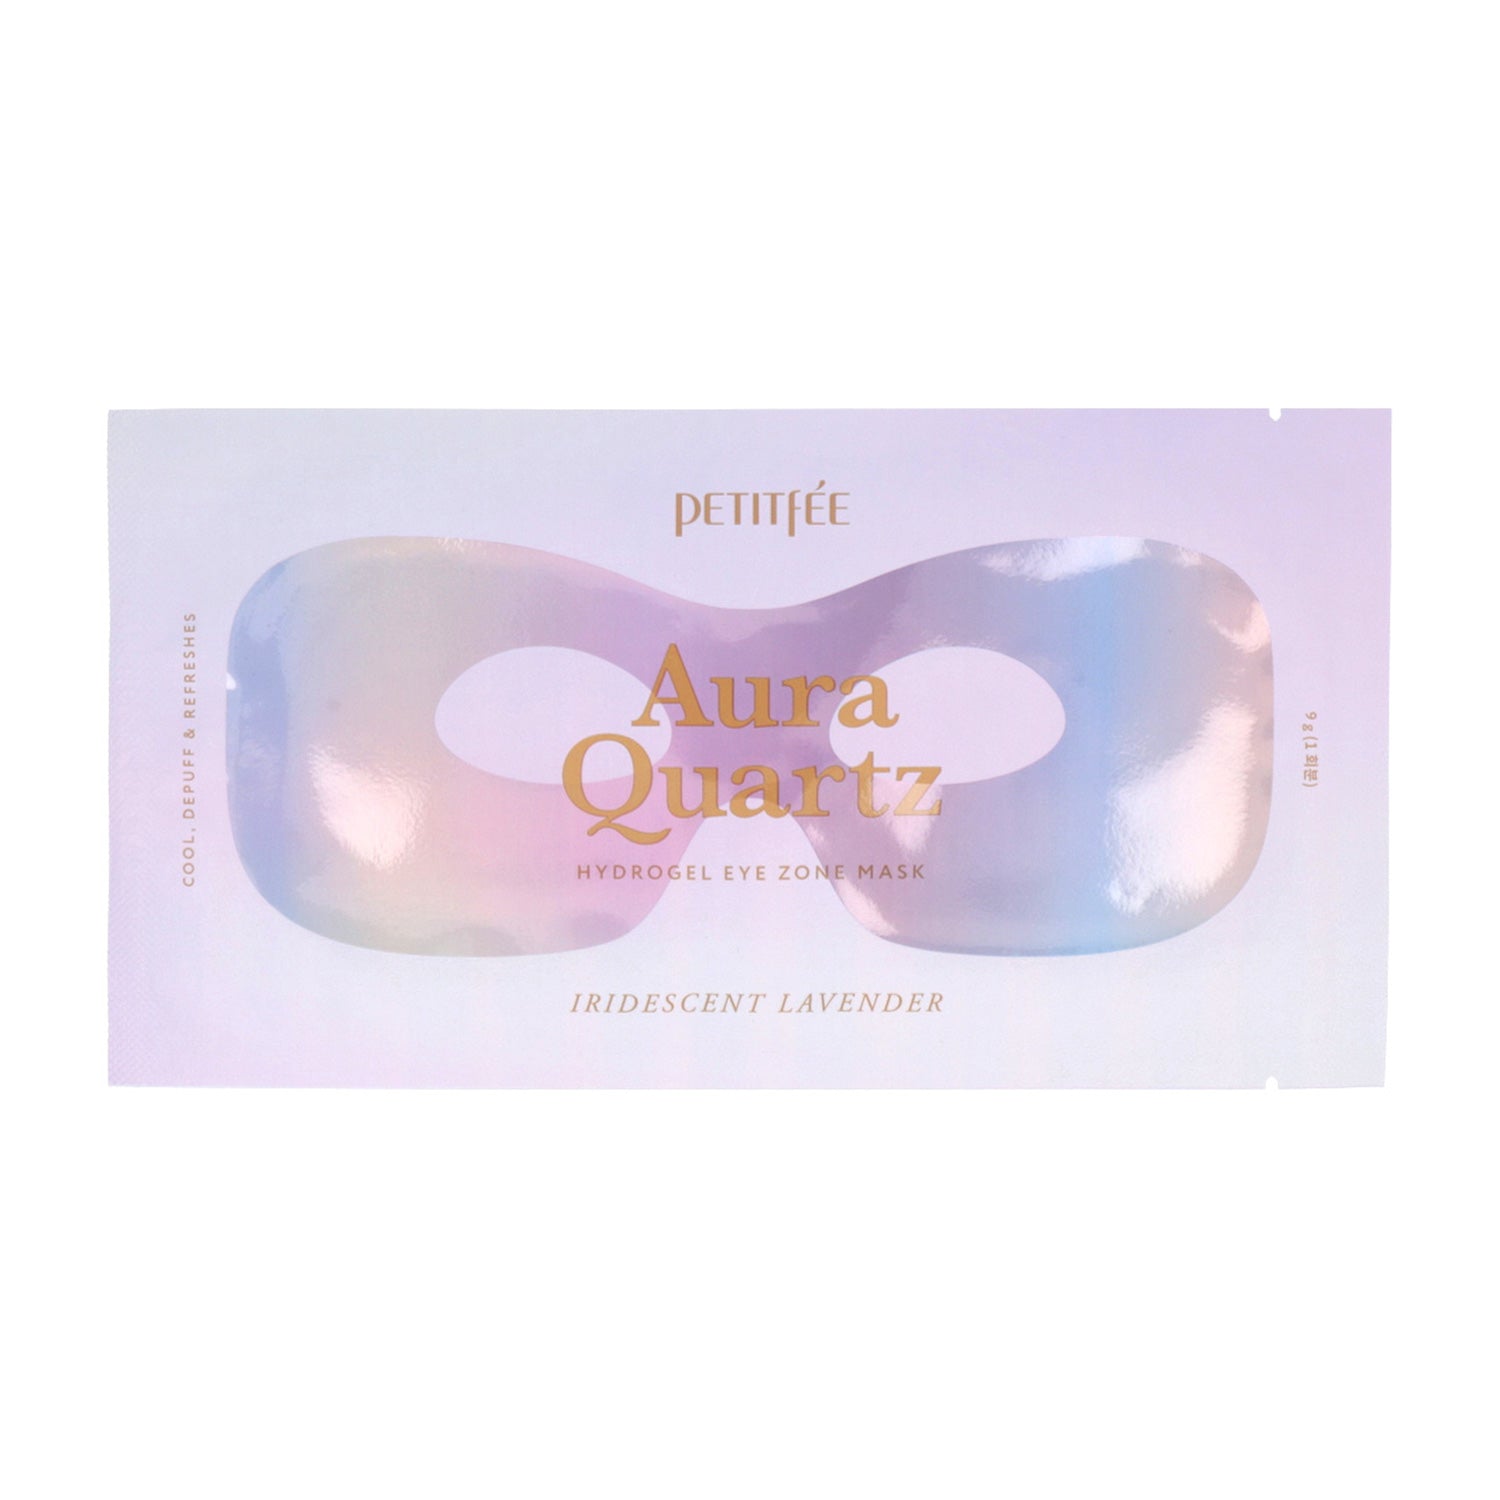 PETITFEE Aura Quartz Hydrogel Eye Zone Mask Iridescent Lavender 1EA - DODOSKIN